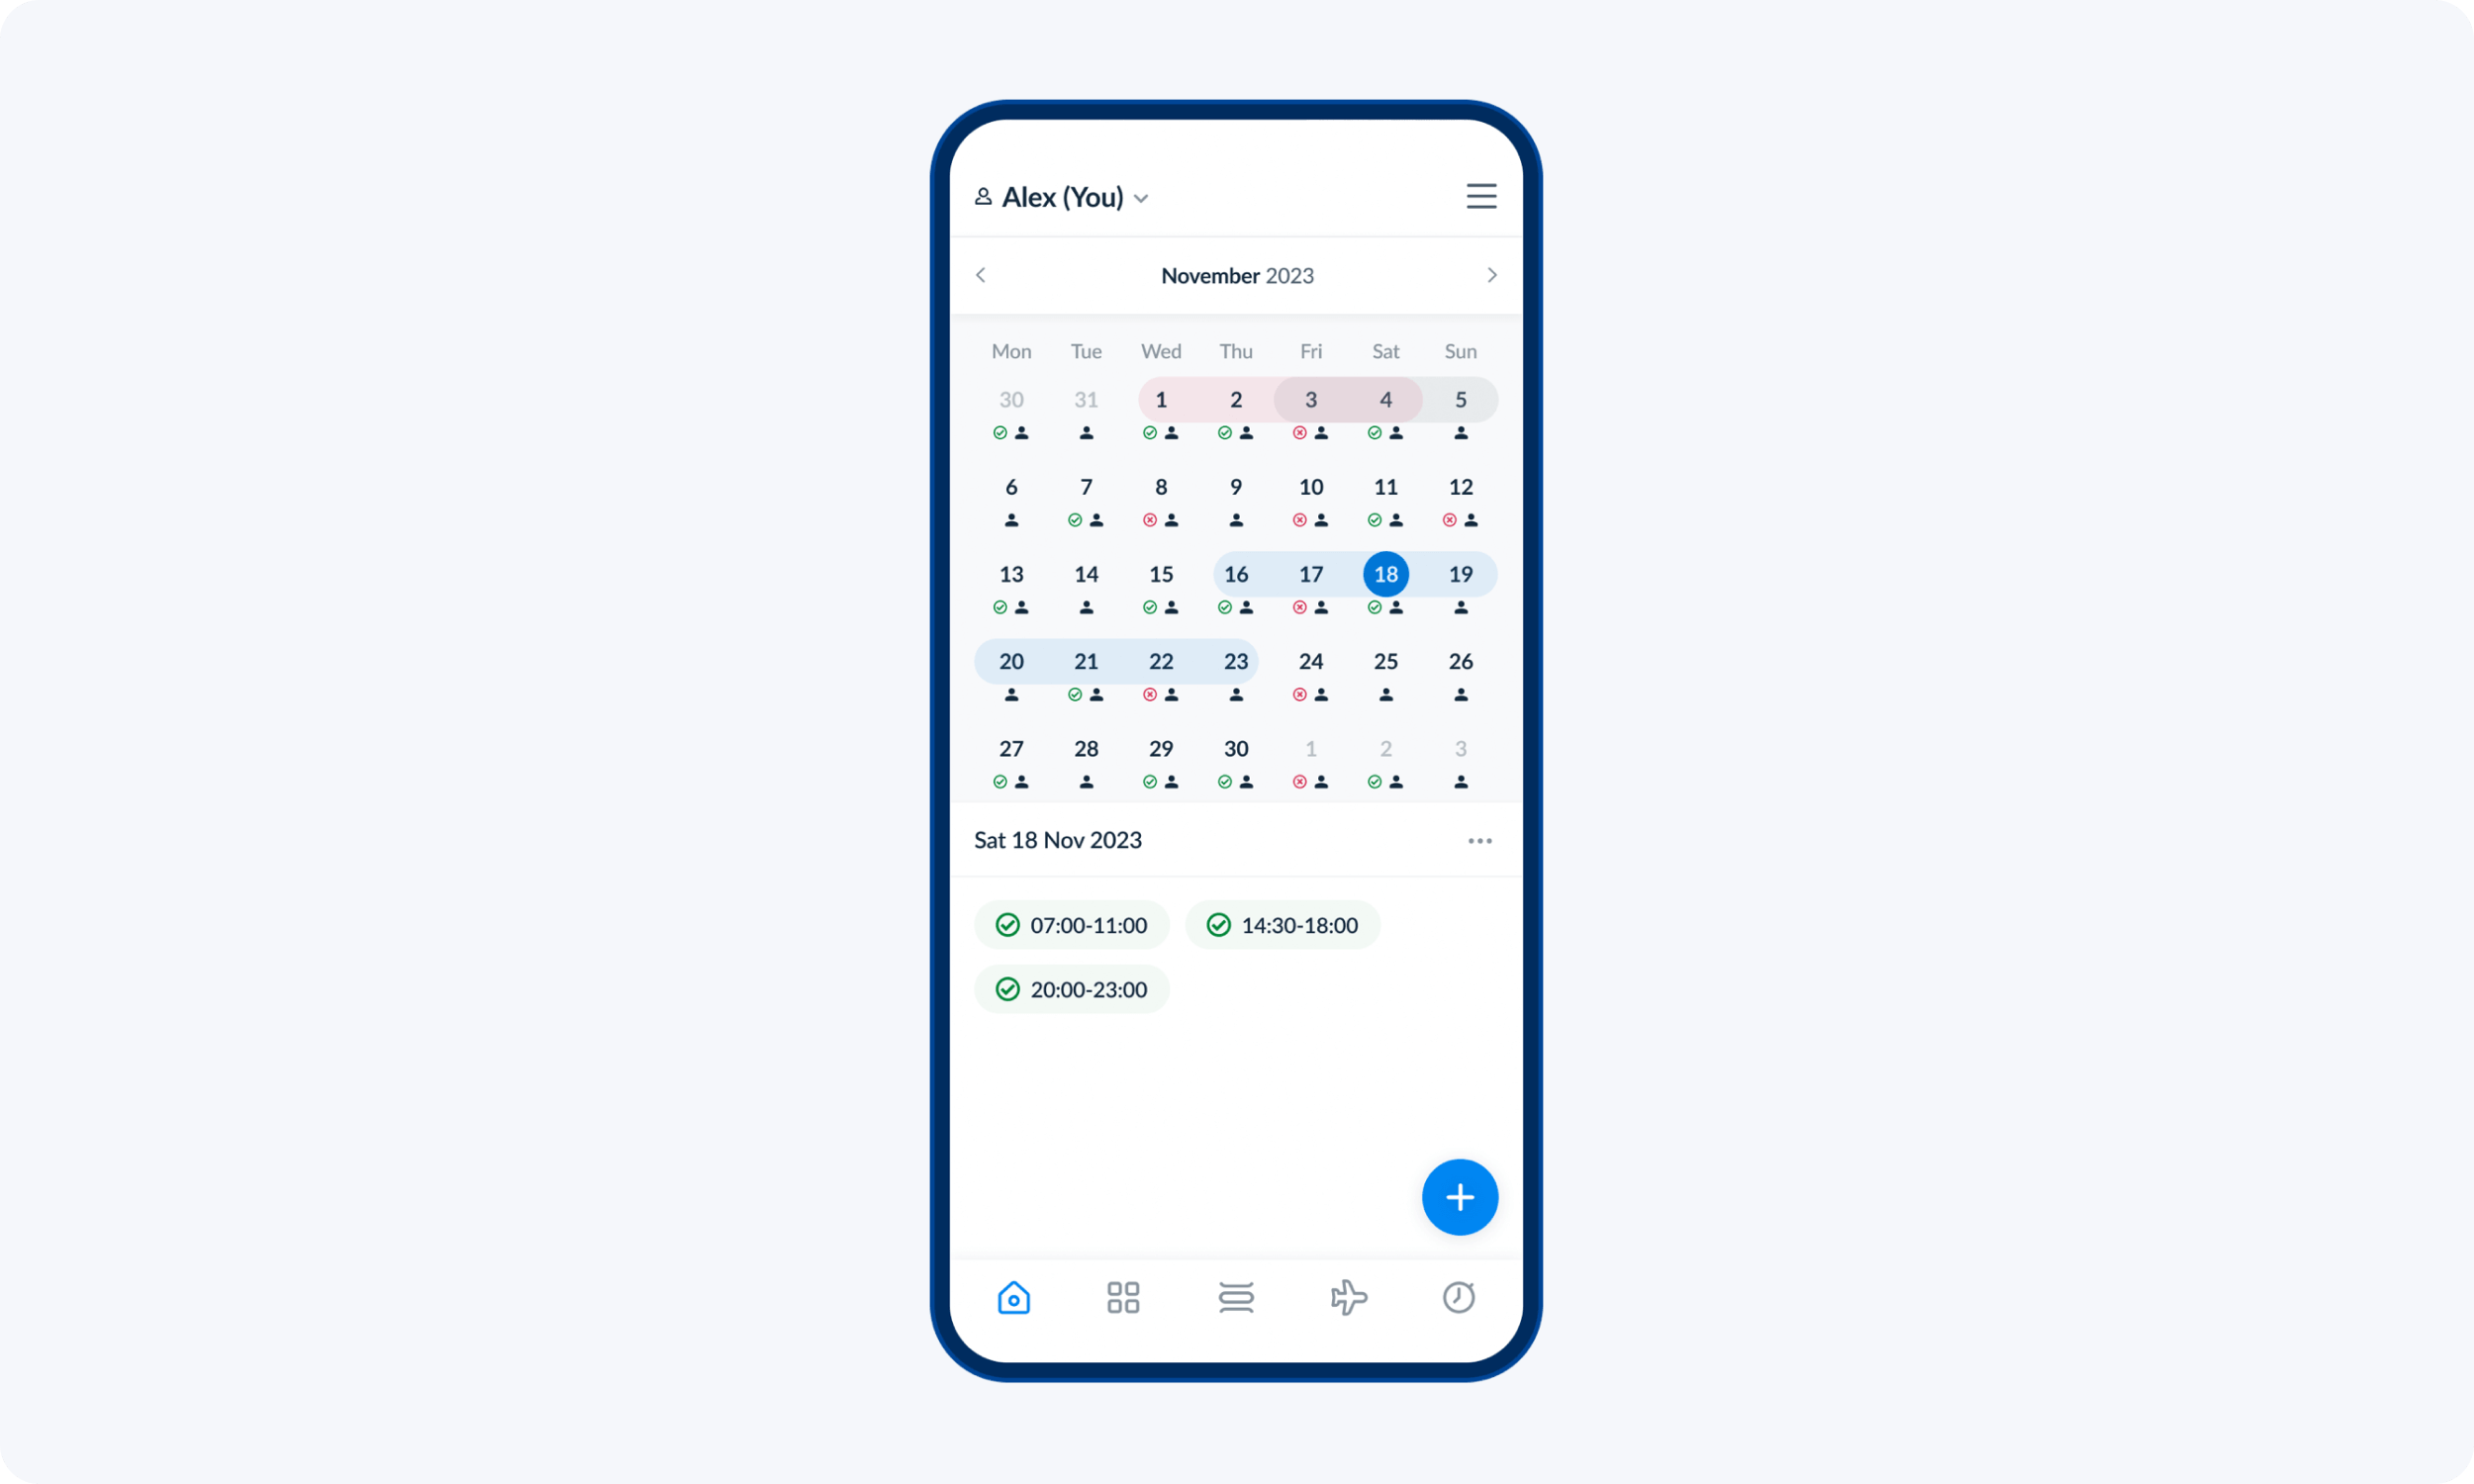 Screenshot of an employee's availability calendar in the RotaCloud mobile app